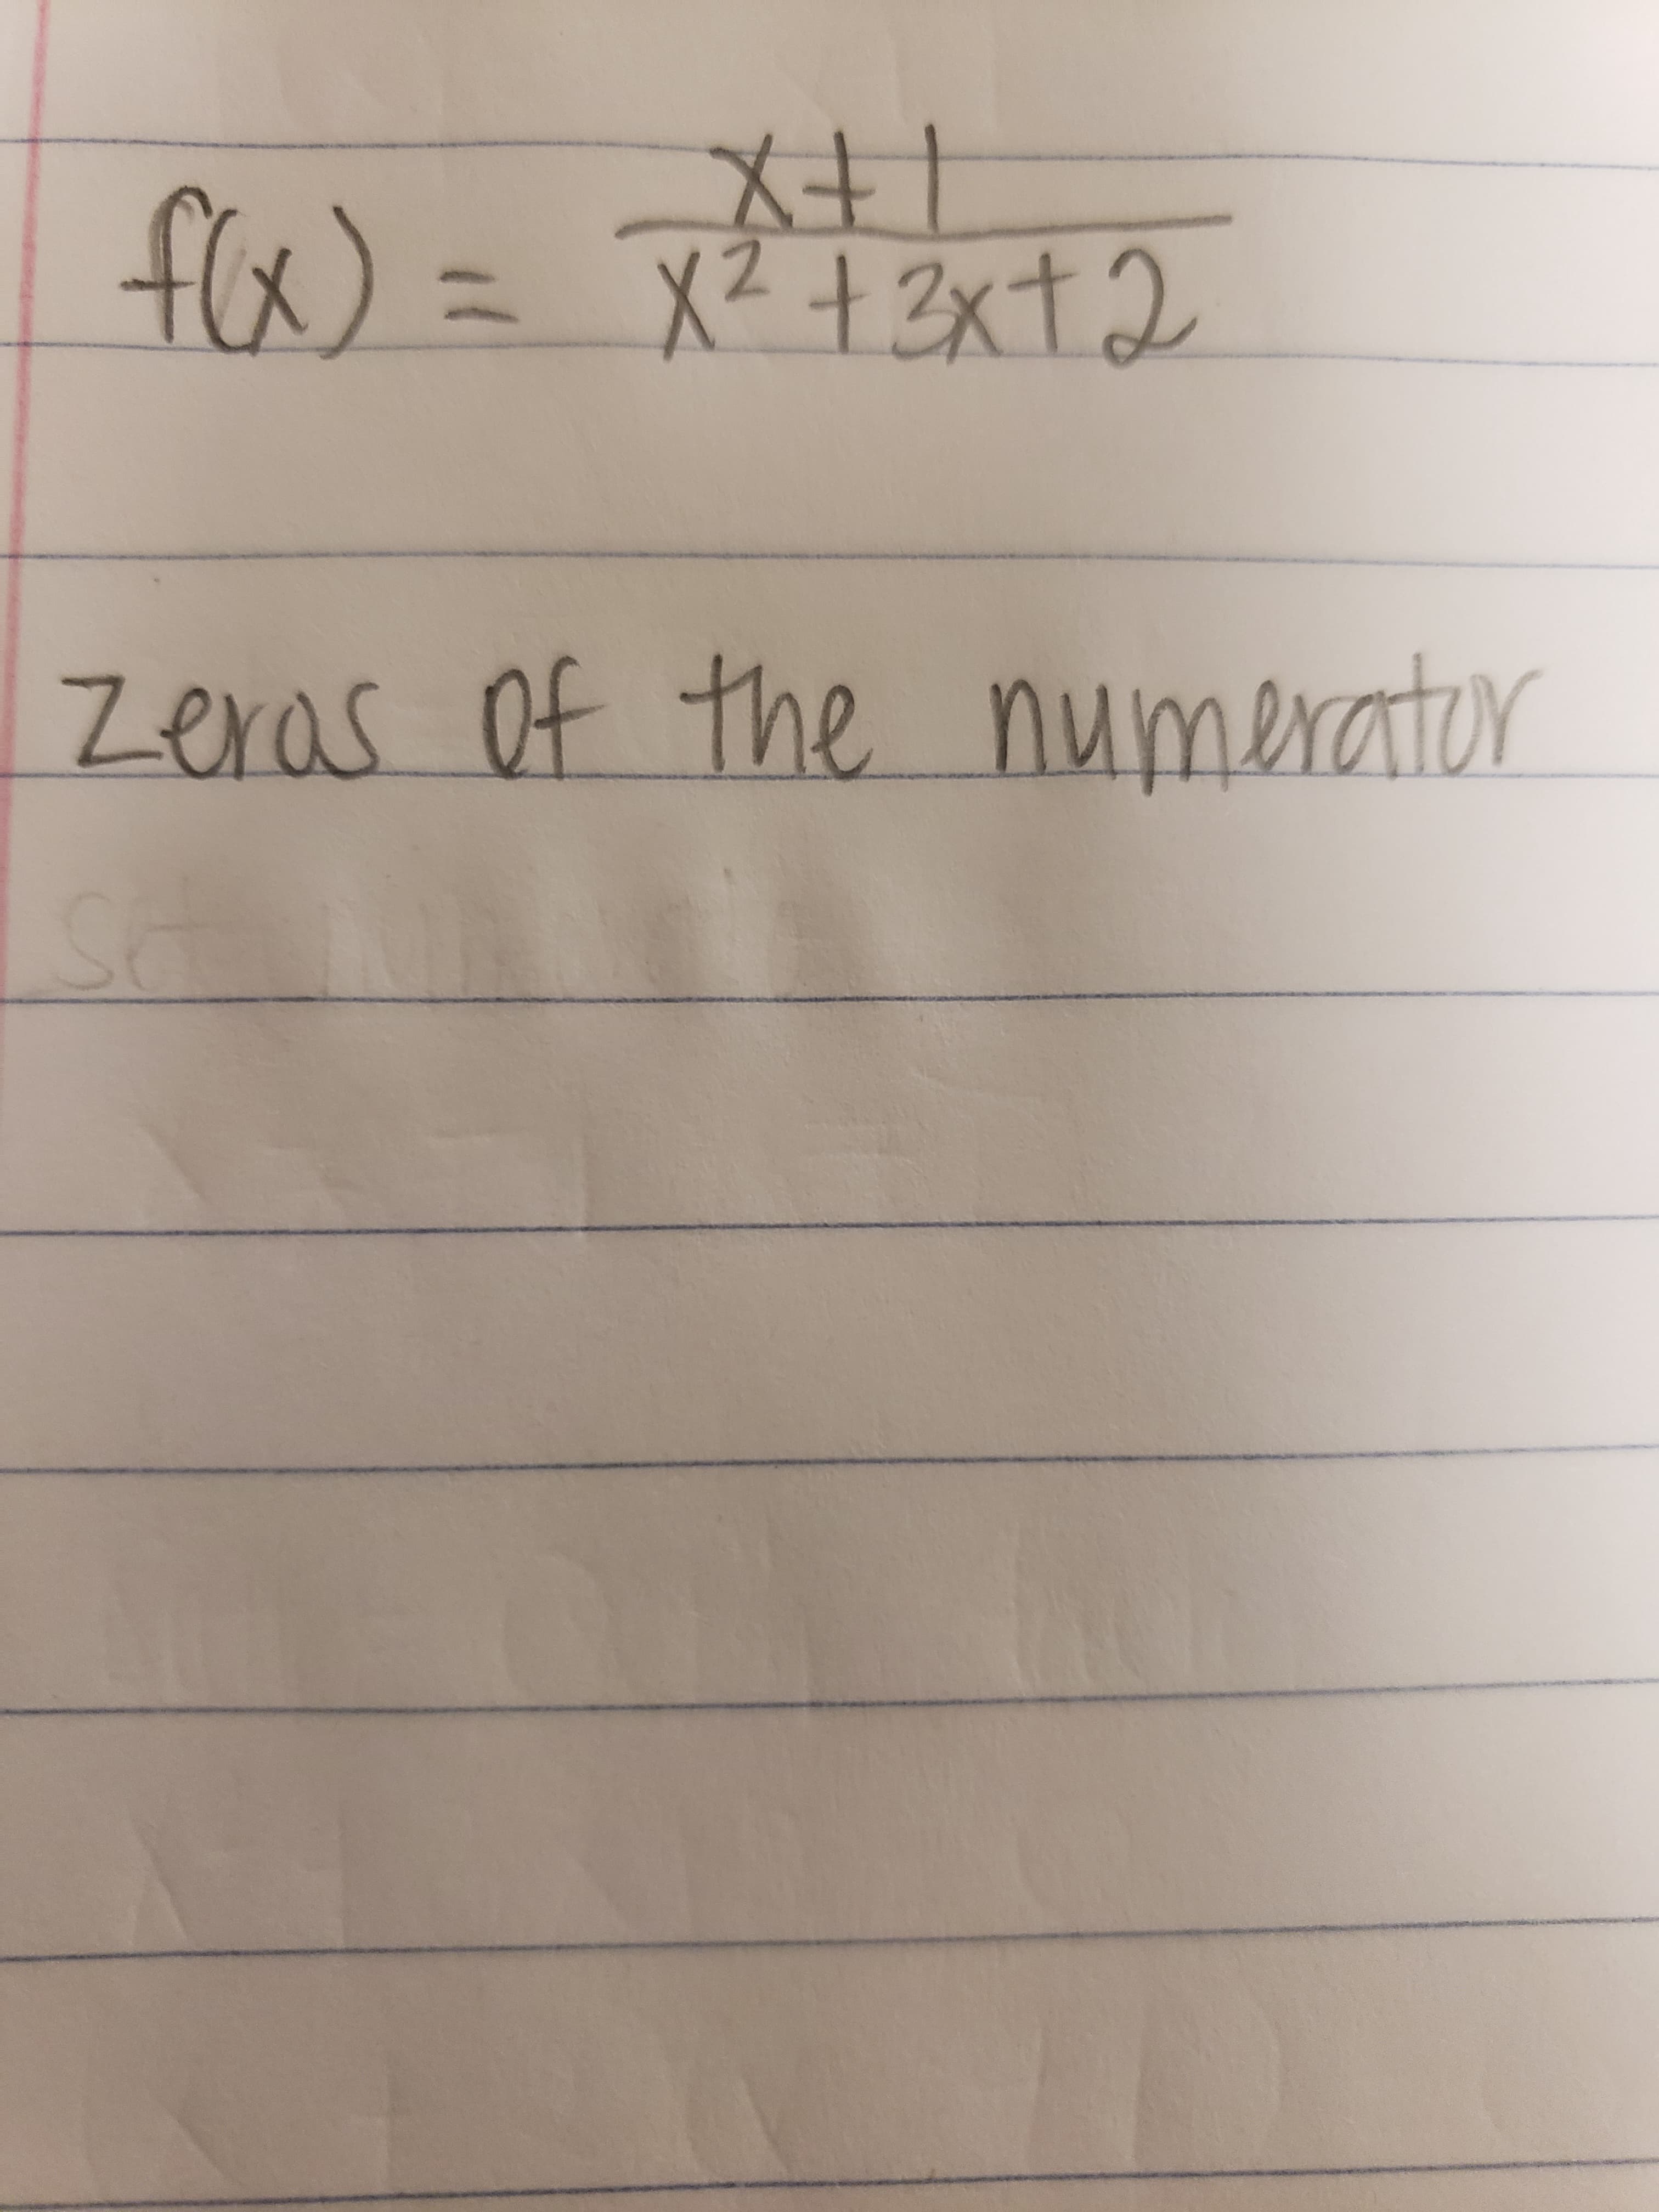 X王1
fx)= スキ2xt2
X² +3xt2
%3D
Zeras of the
numerator
